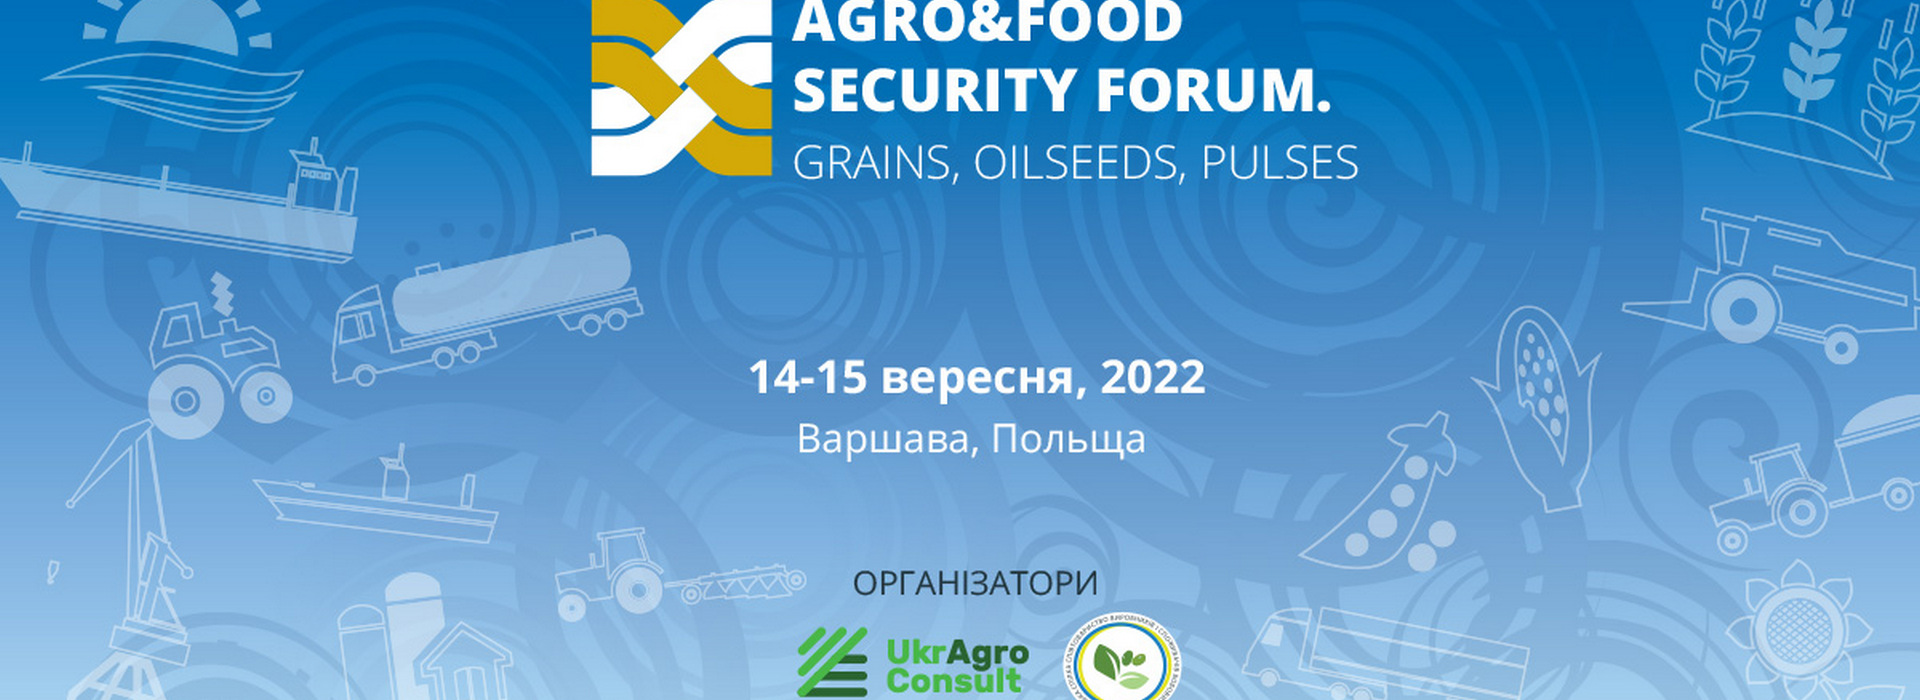 Agro&Food Security Forum. Grains, Oilseeds, Pulses